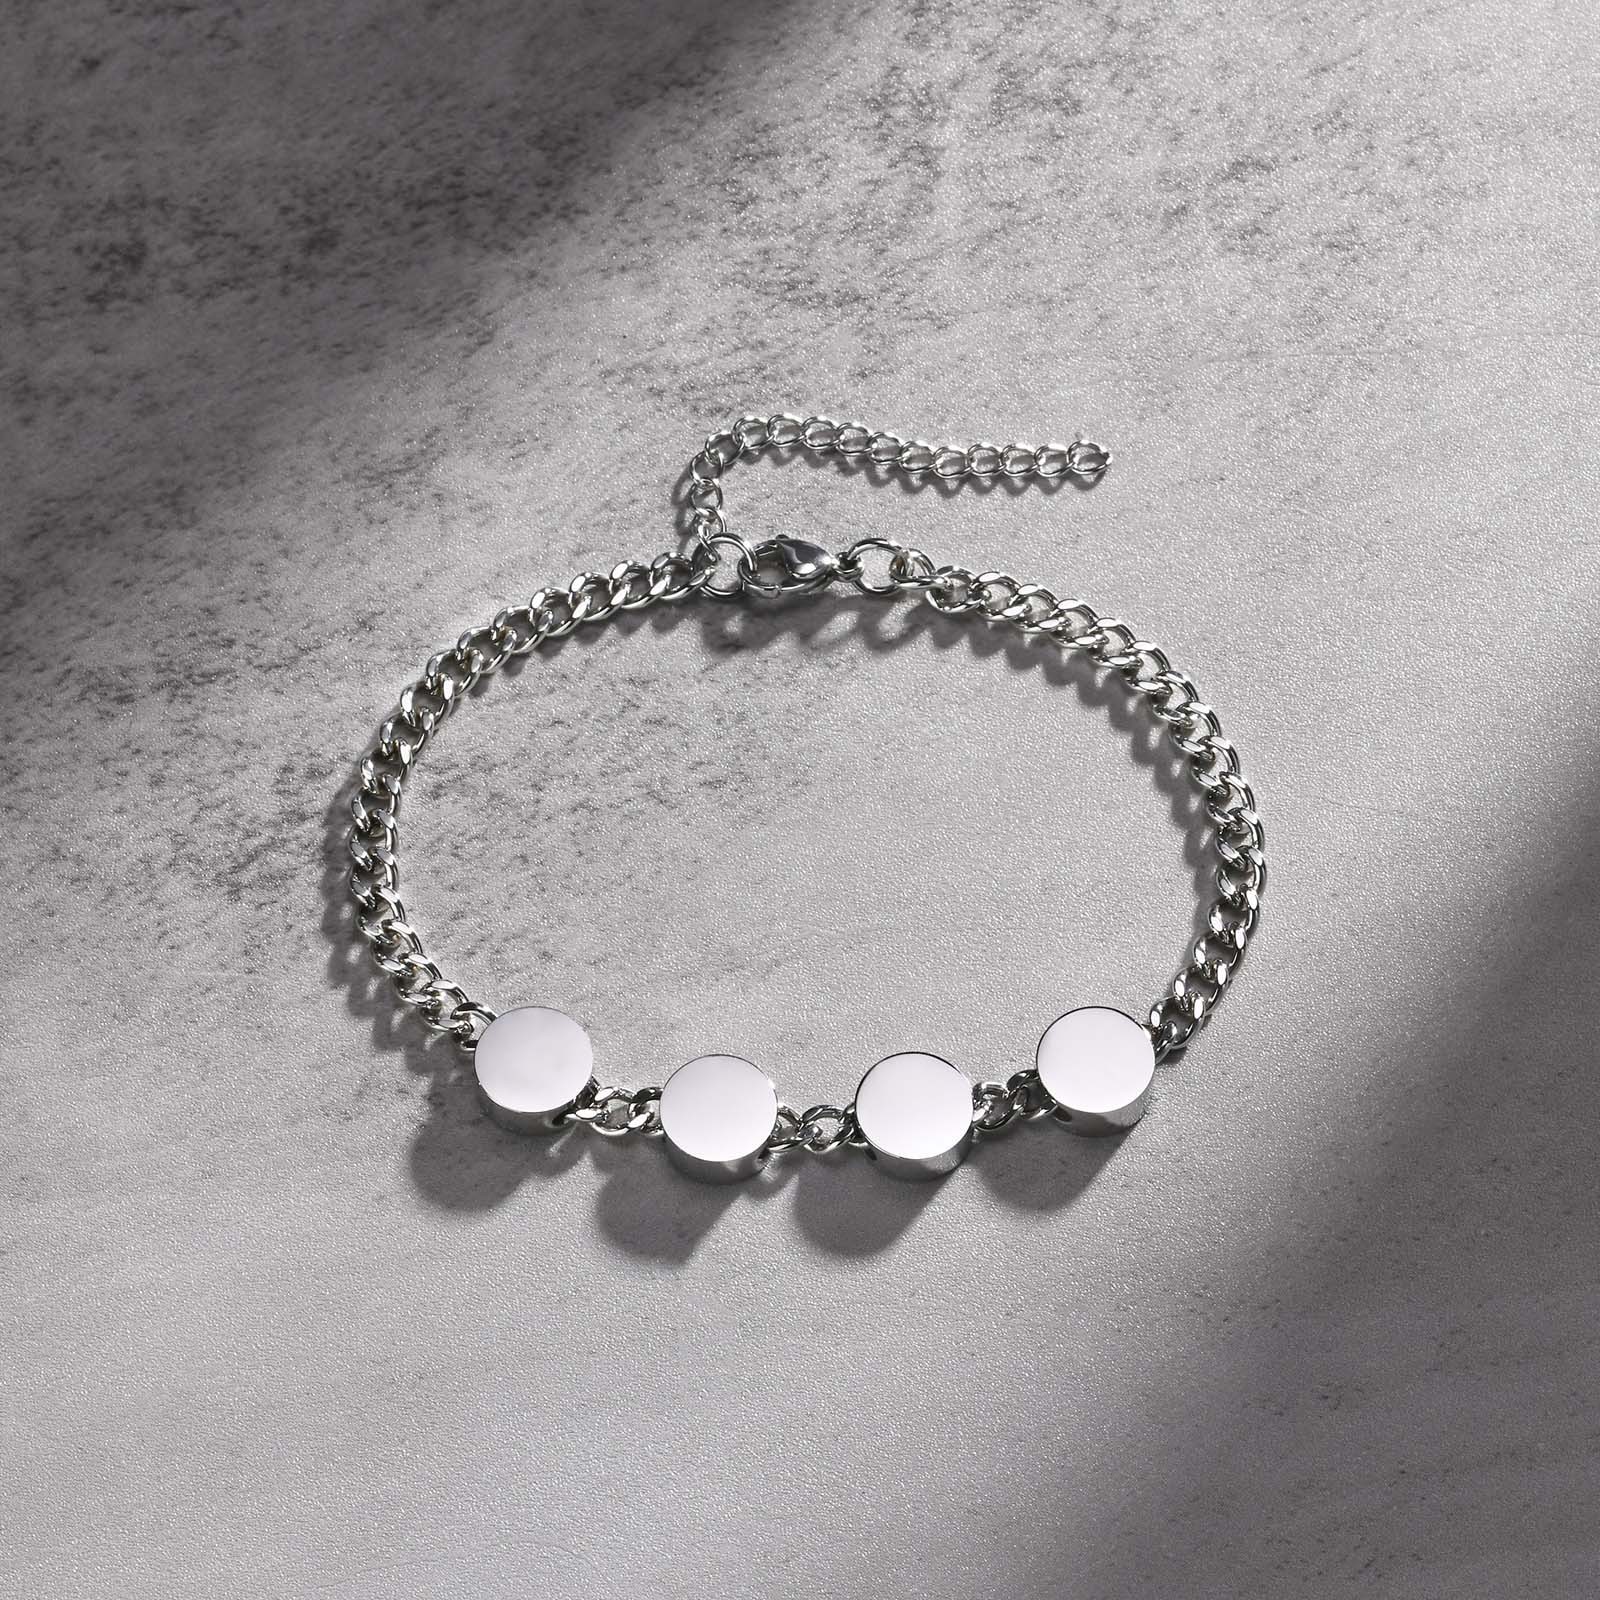 5:4 accessory [blank] bracelet